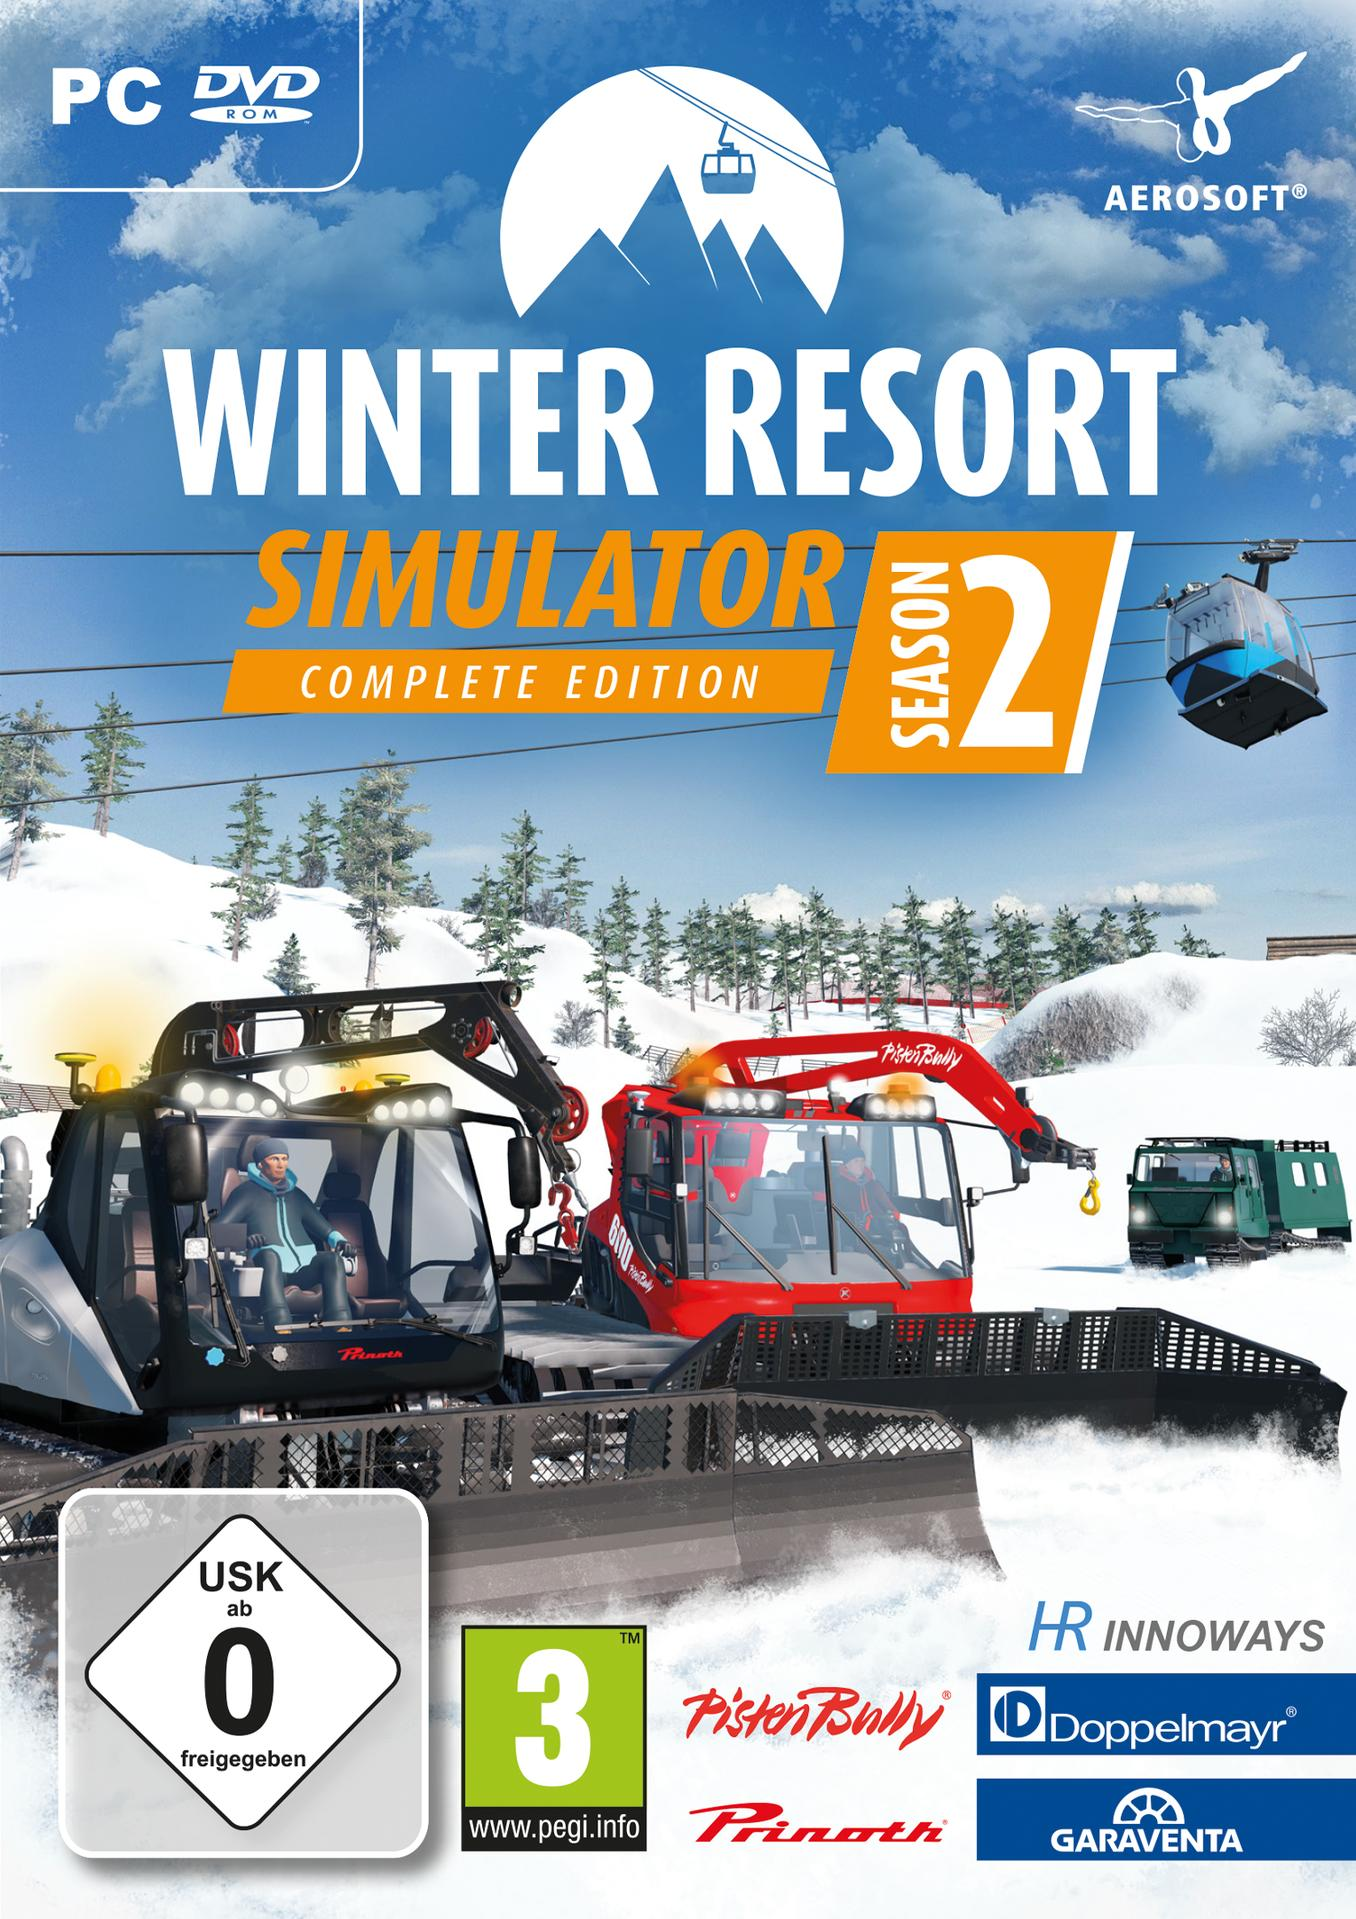 Winter Resort Simulator Season 2 Edition Complete [PC] - 